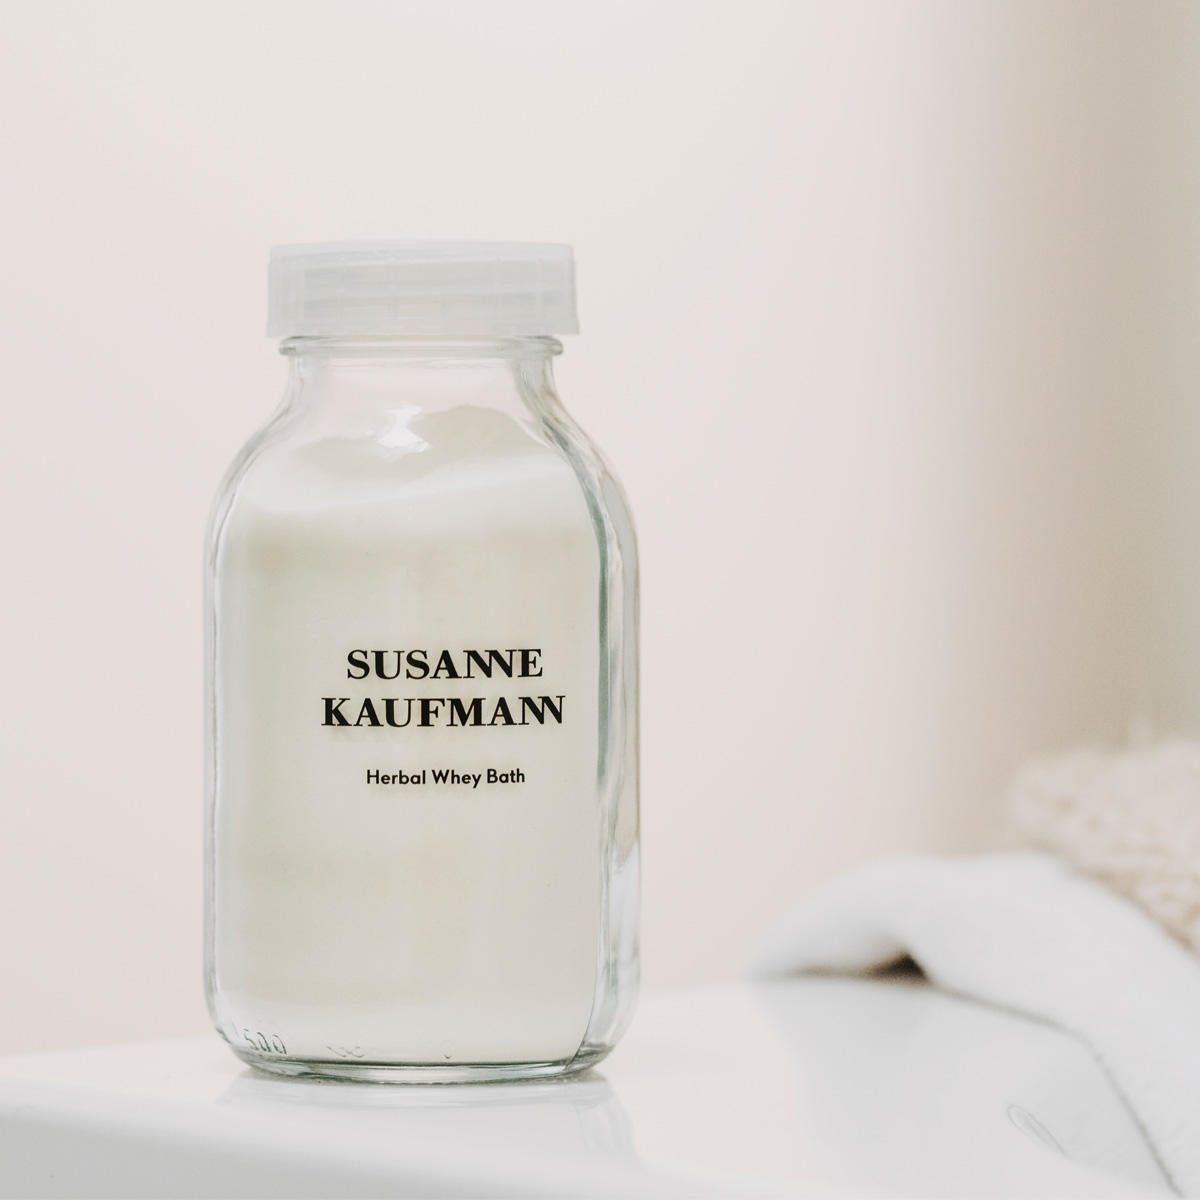 Susanne Kaufmann Bagno di siero di latte alle erbe nutriente 300 g - 2